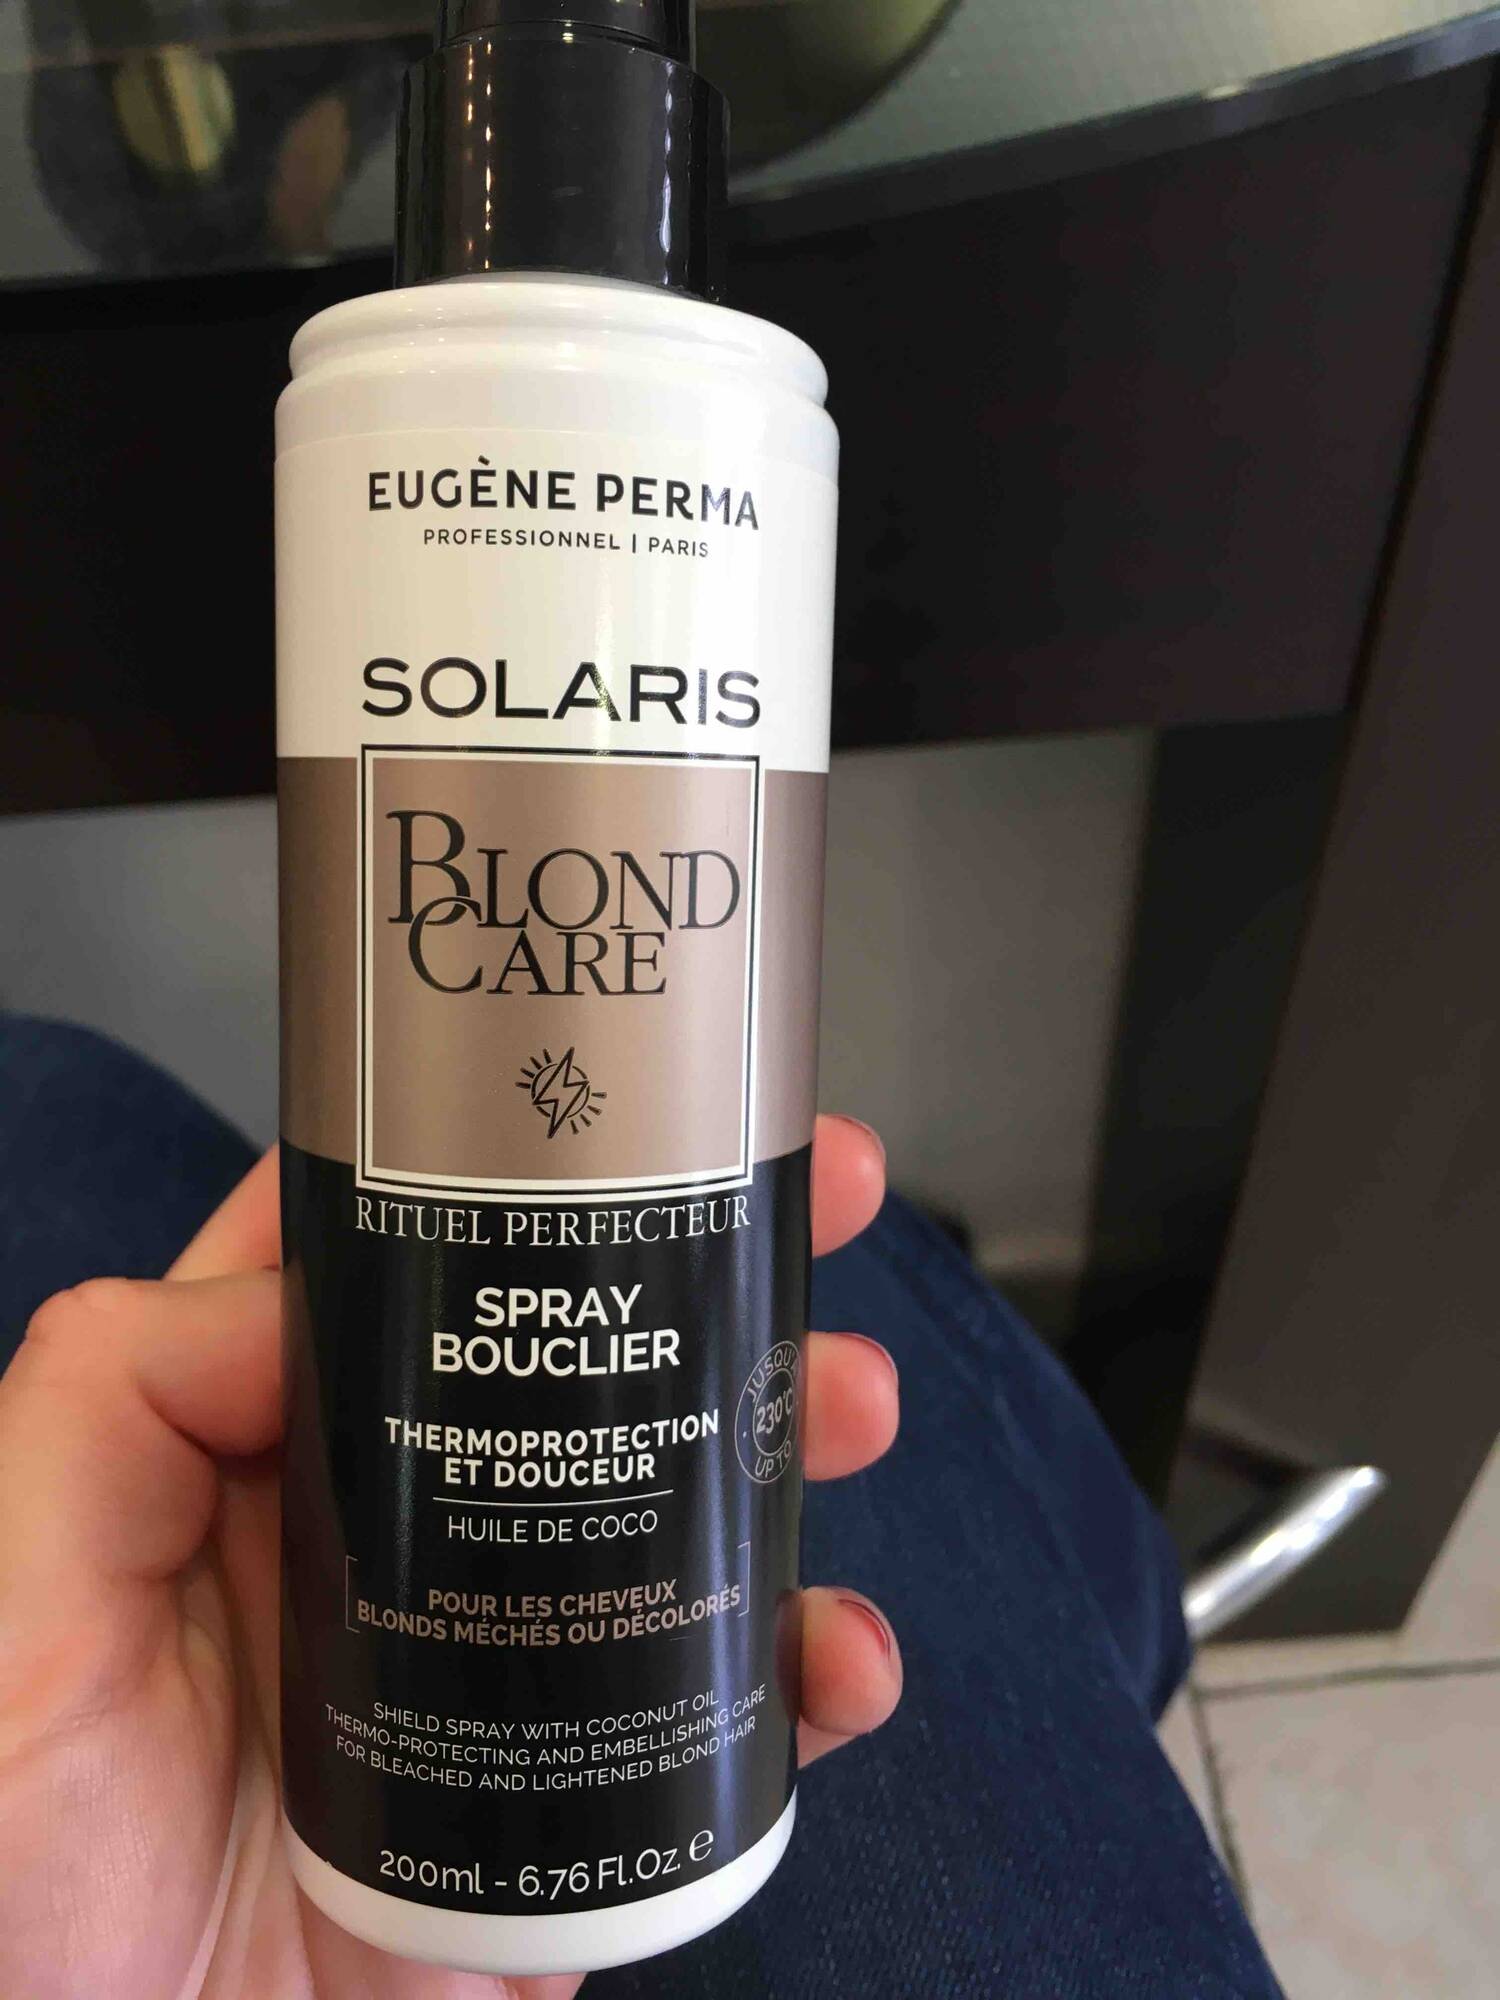 EUGÈNE PERMA - Solaris blond care - Spray bouclier huile de coco